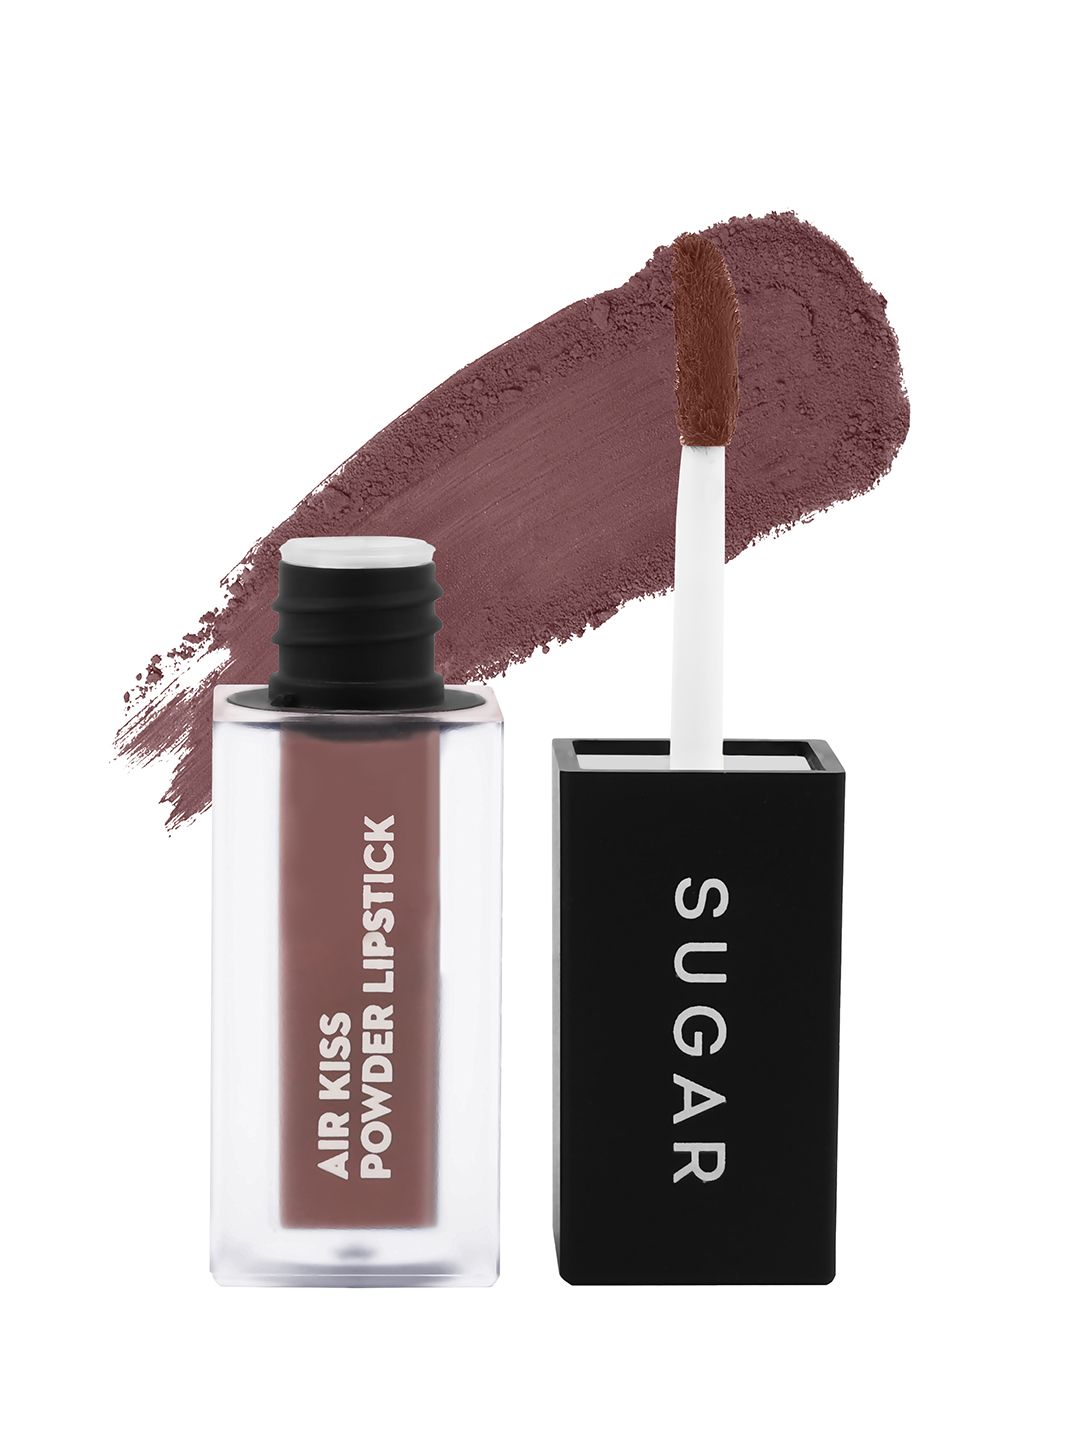 SUGAR Air Kiss Powder Lipstick - Mocha Mousse 01 Price in India